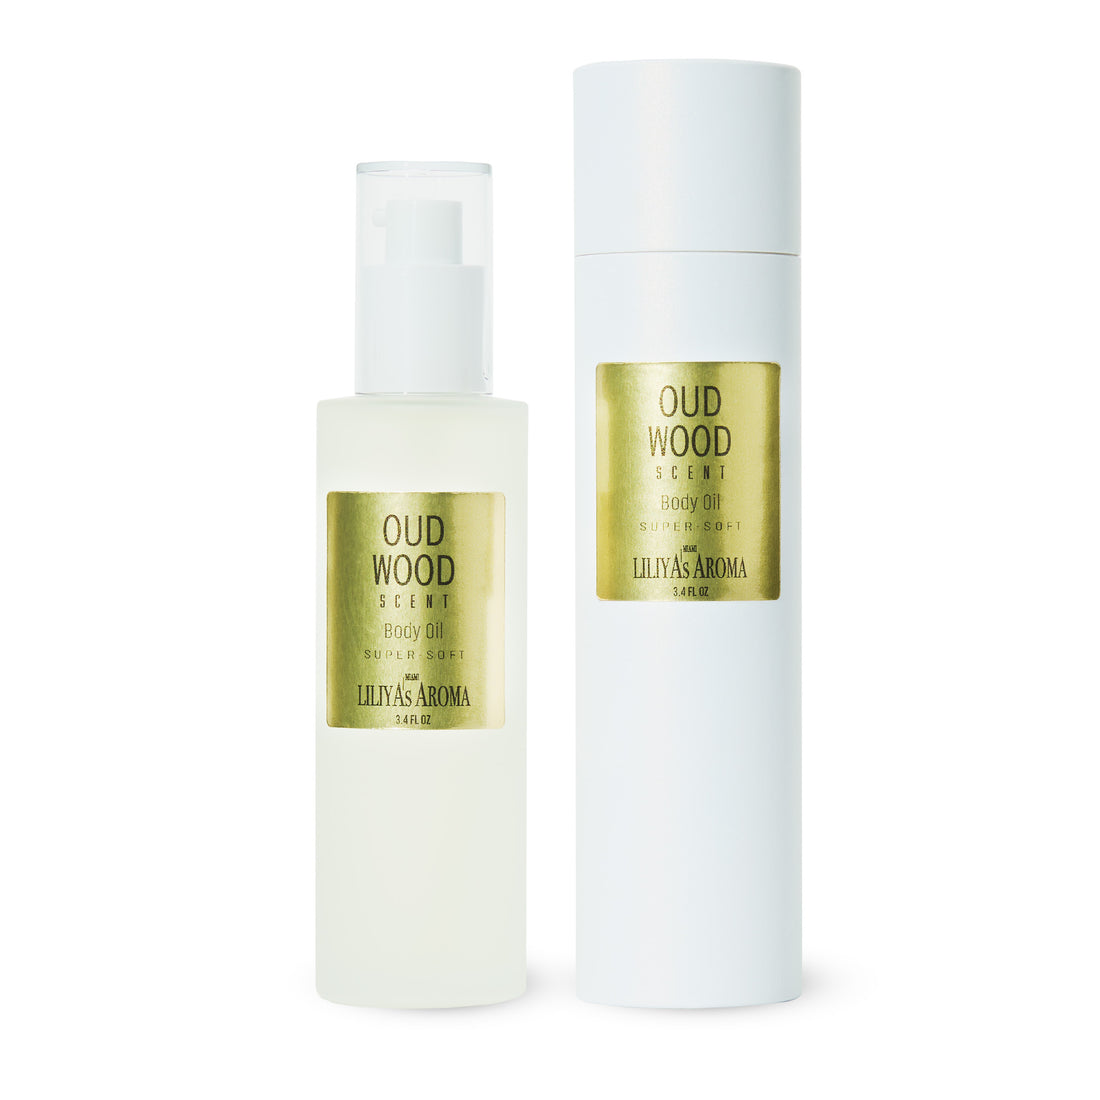 Body Oil Oud Wood - Super Soft Skin - Perfume Oil for Women and Men 3.4 Fl. Oz